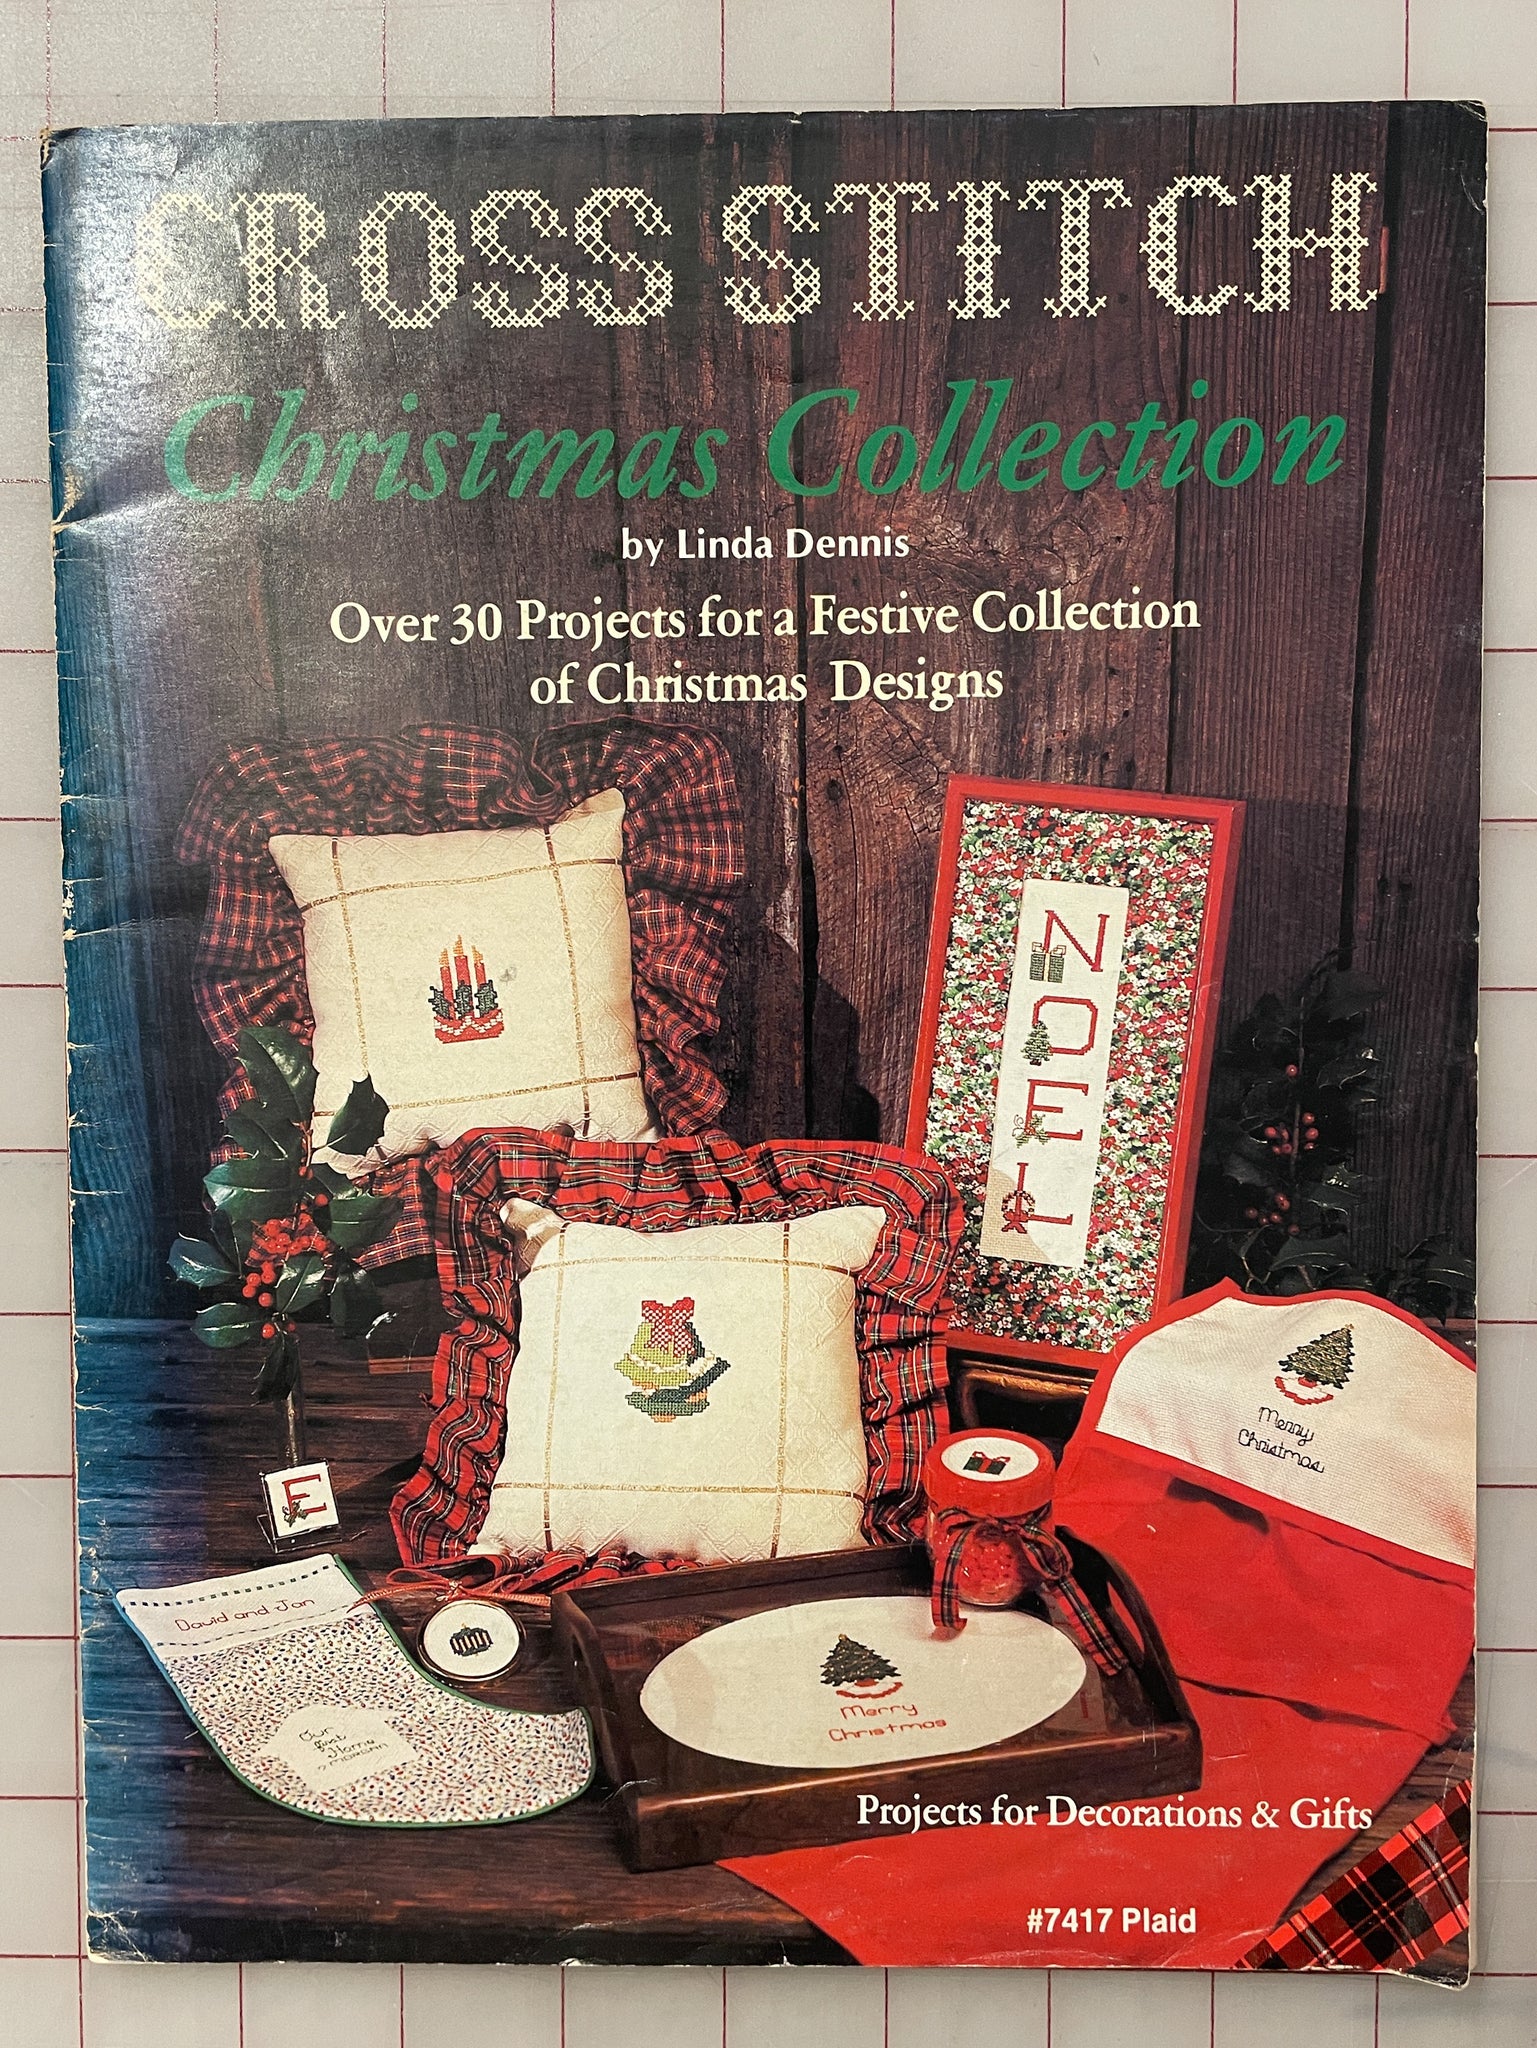 SALE 1981 Cross Stitch Book - "Cross Stitch Christmas Collection"